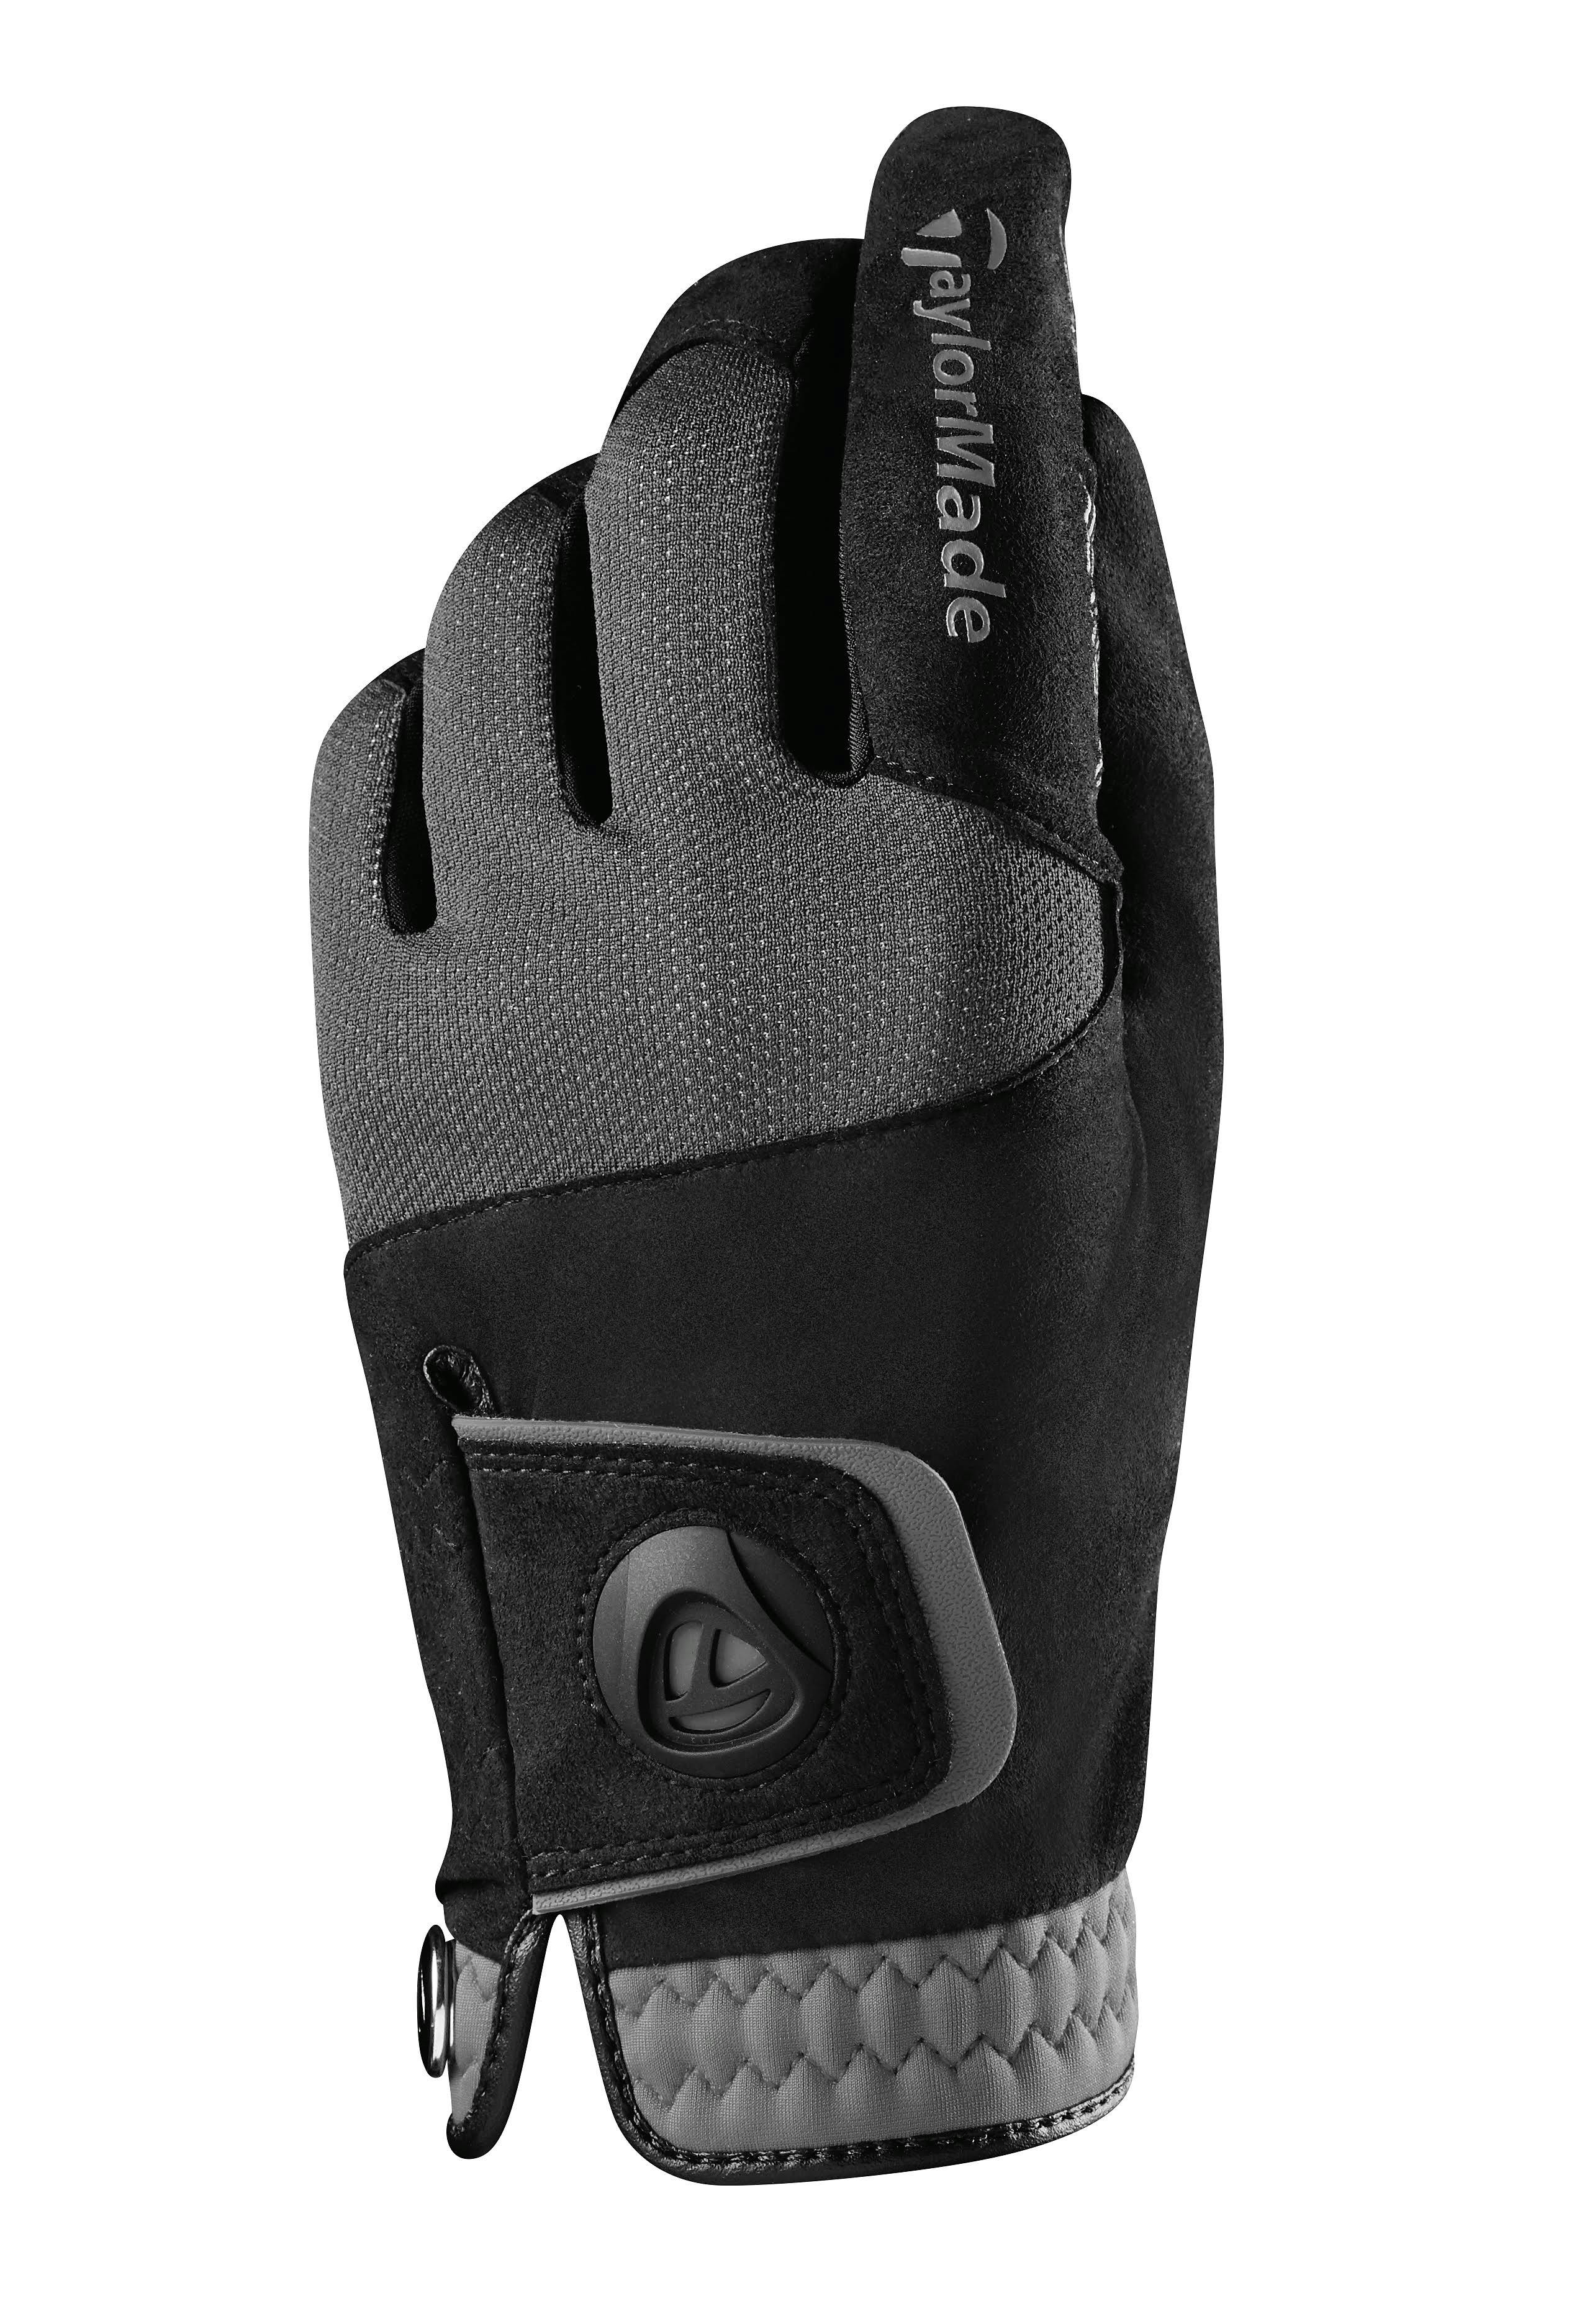 TaylorMade Golf Rain Control Gloves Size XL | Black/Gray